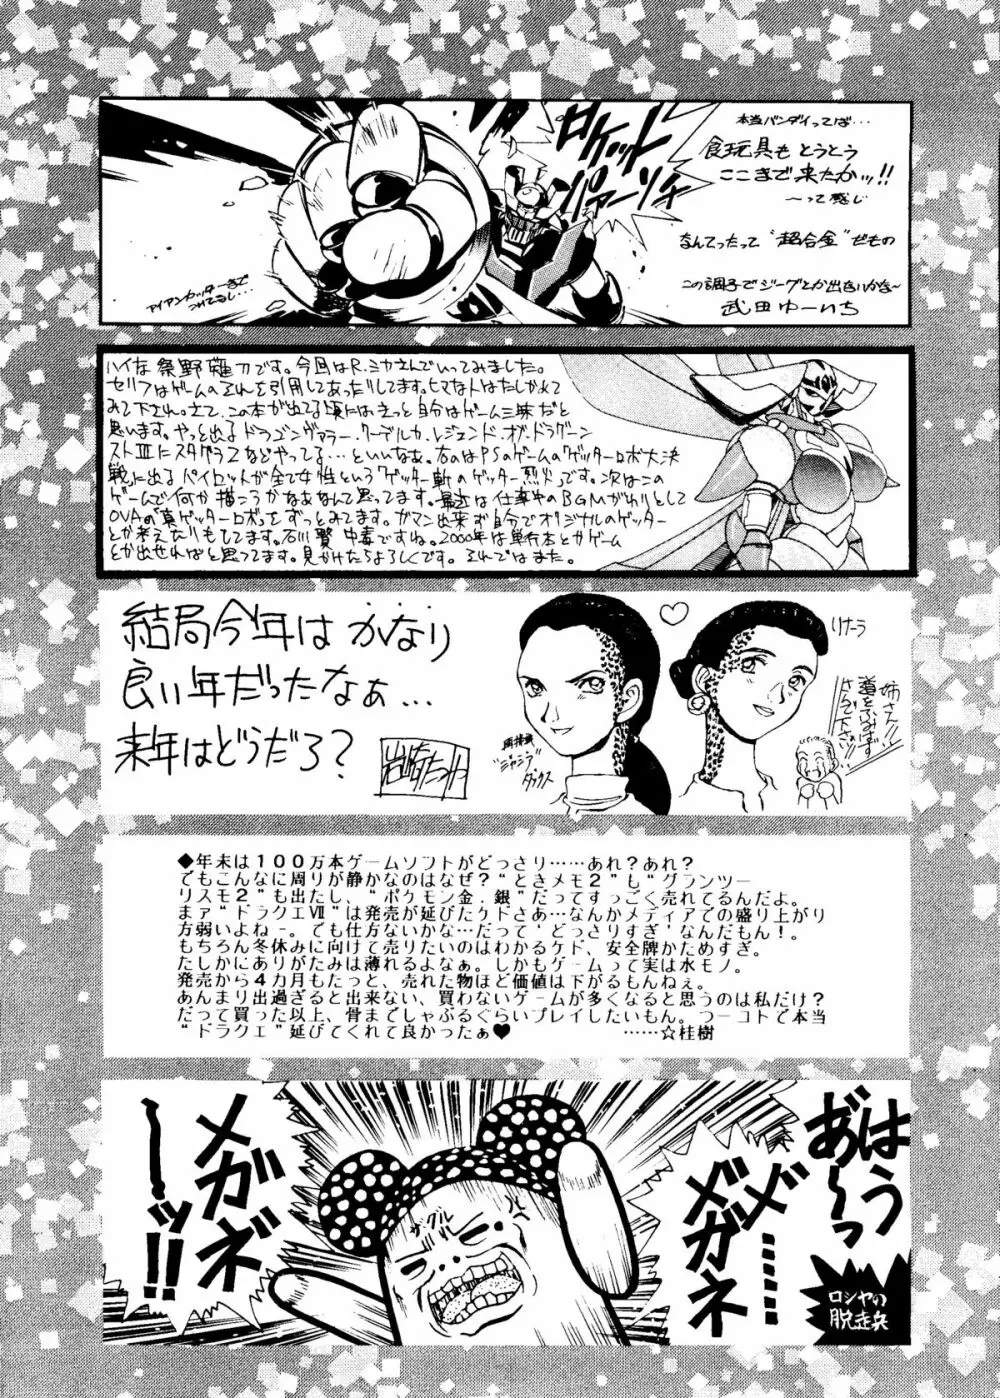 BUY or DIE おかちめんたいこ 96ページ